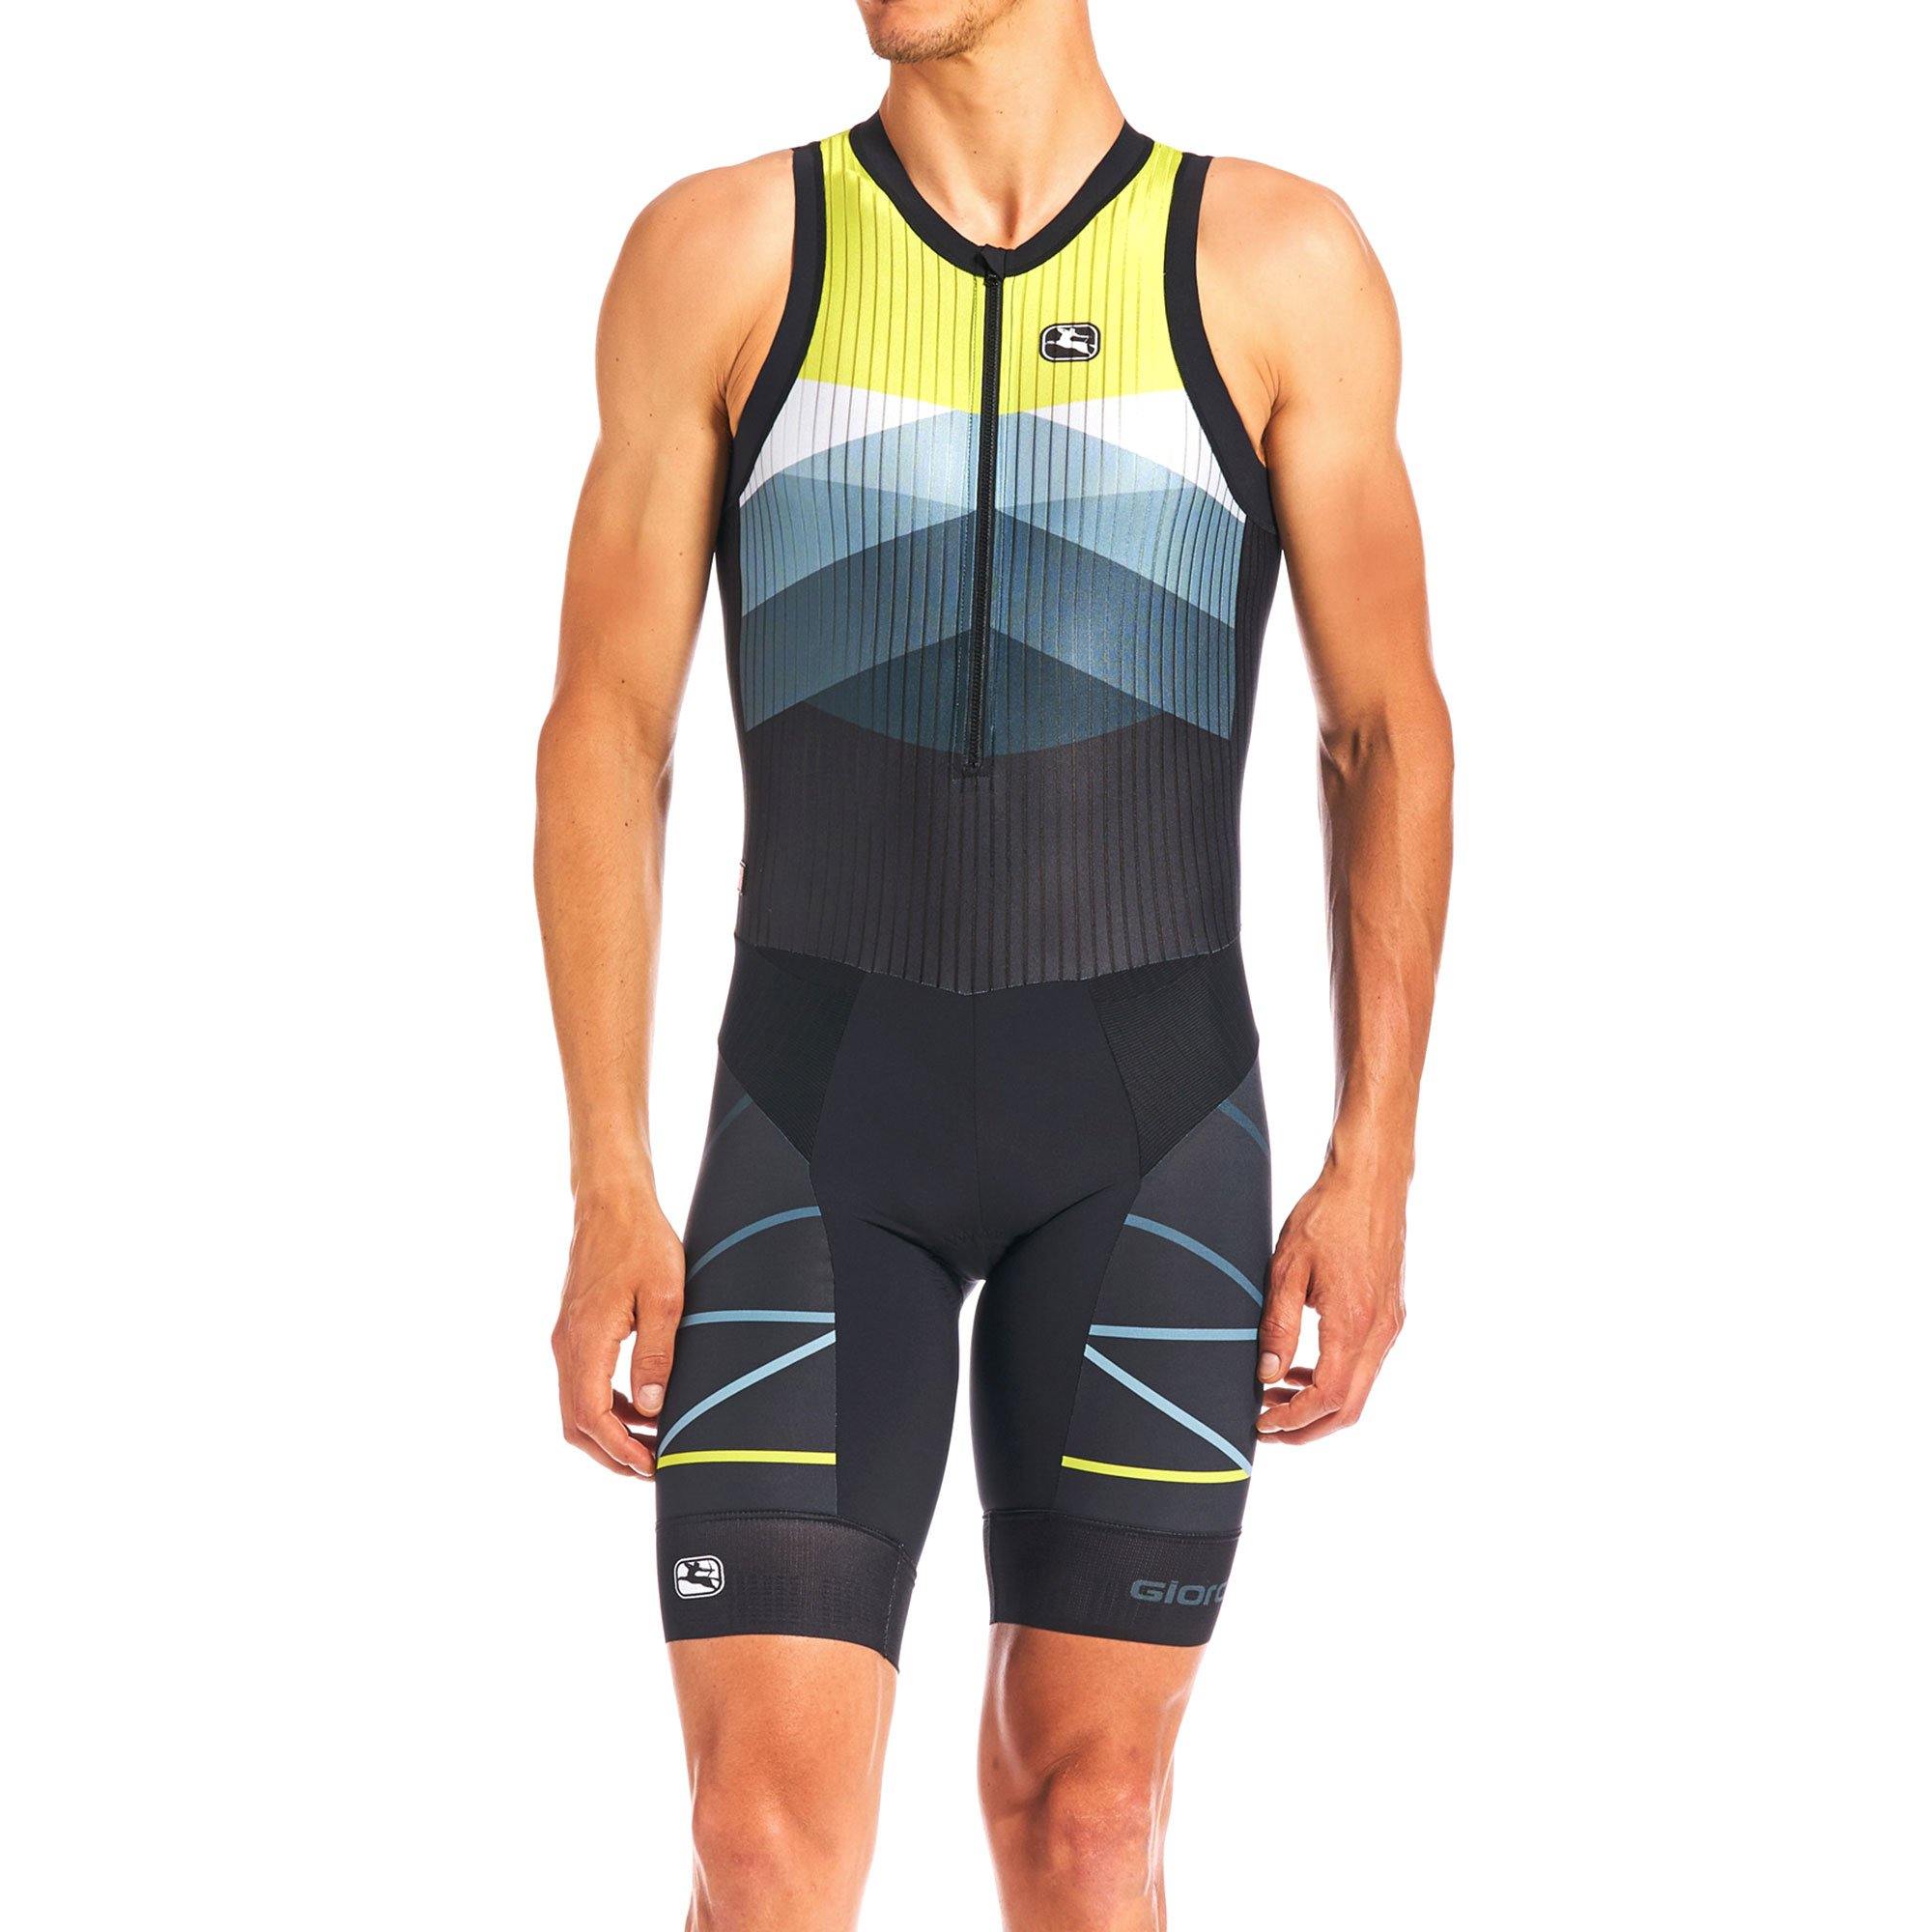 FR-C Pro Tri Sleeveless Suit– Giordana Cycling